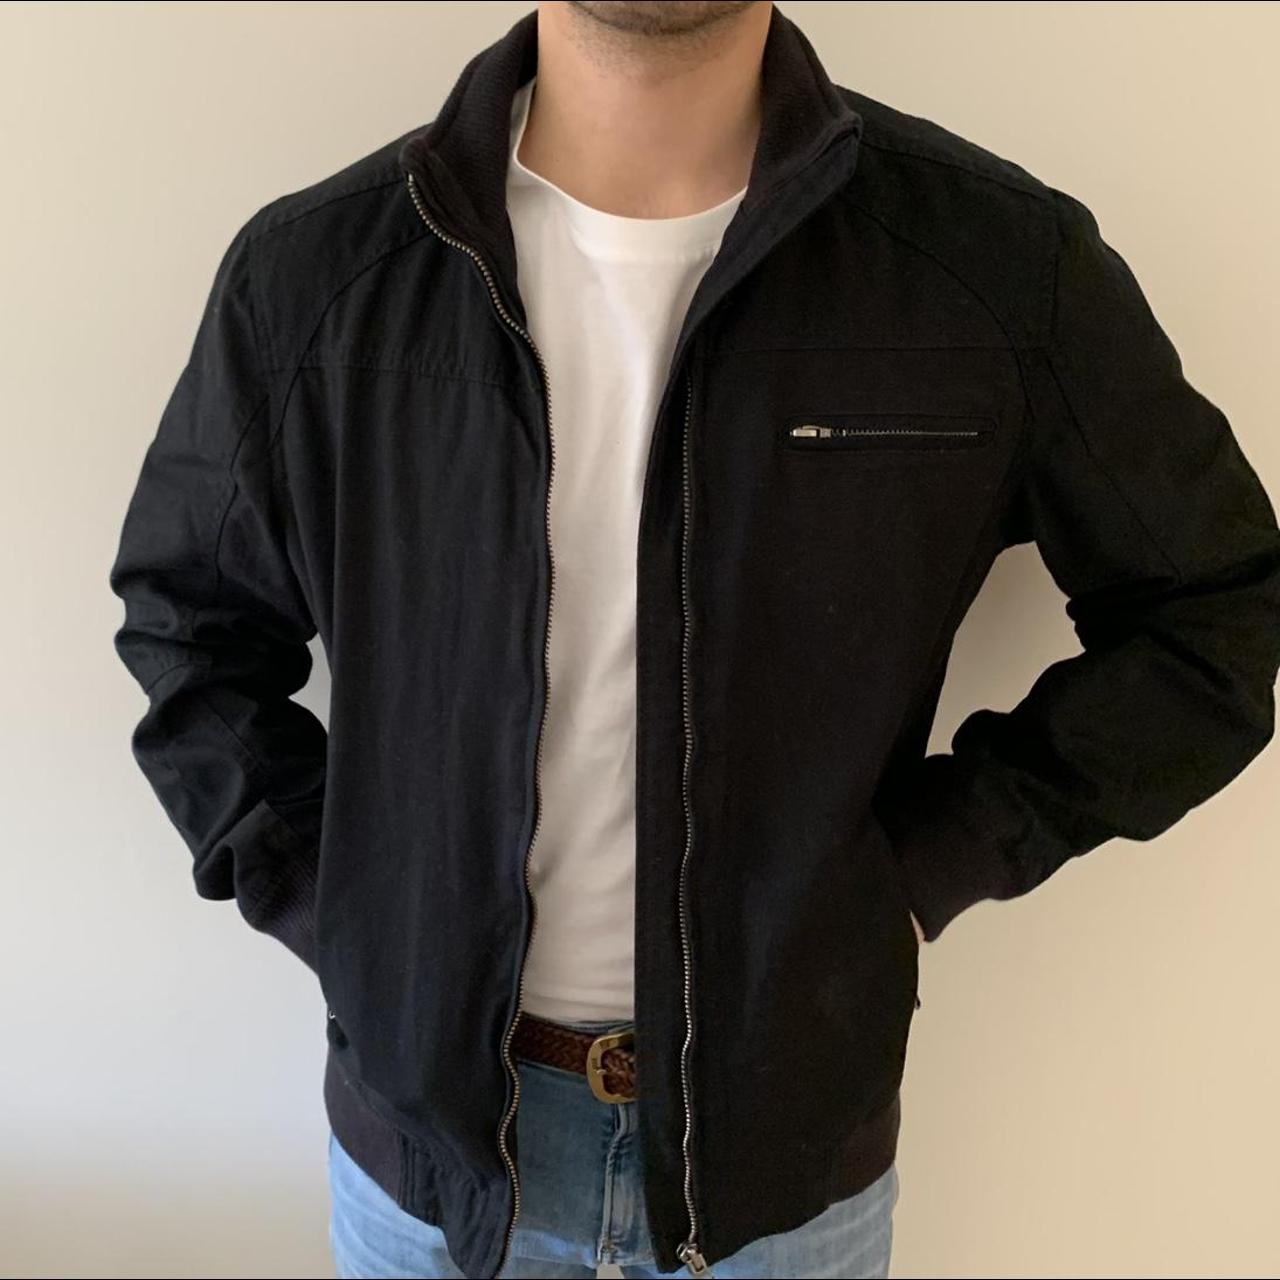 ELWOOD Black Jacket Size: Medium Tapered fit,... - Depop